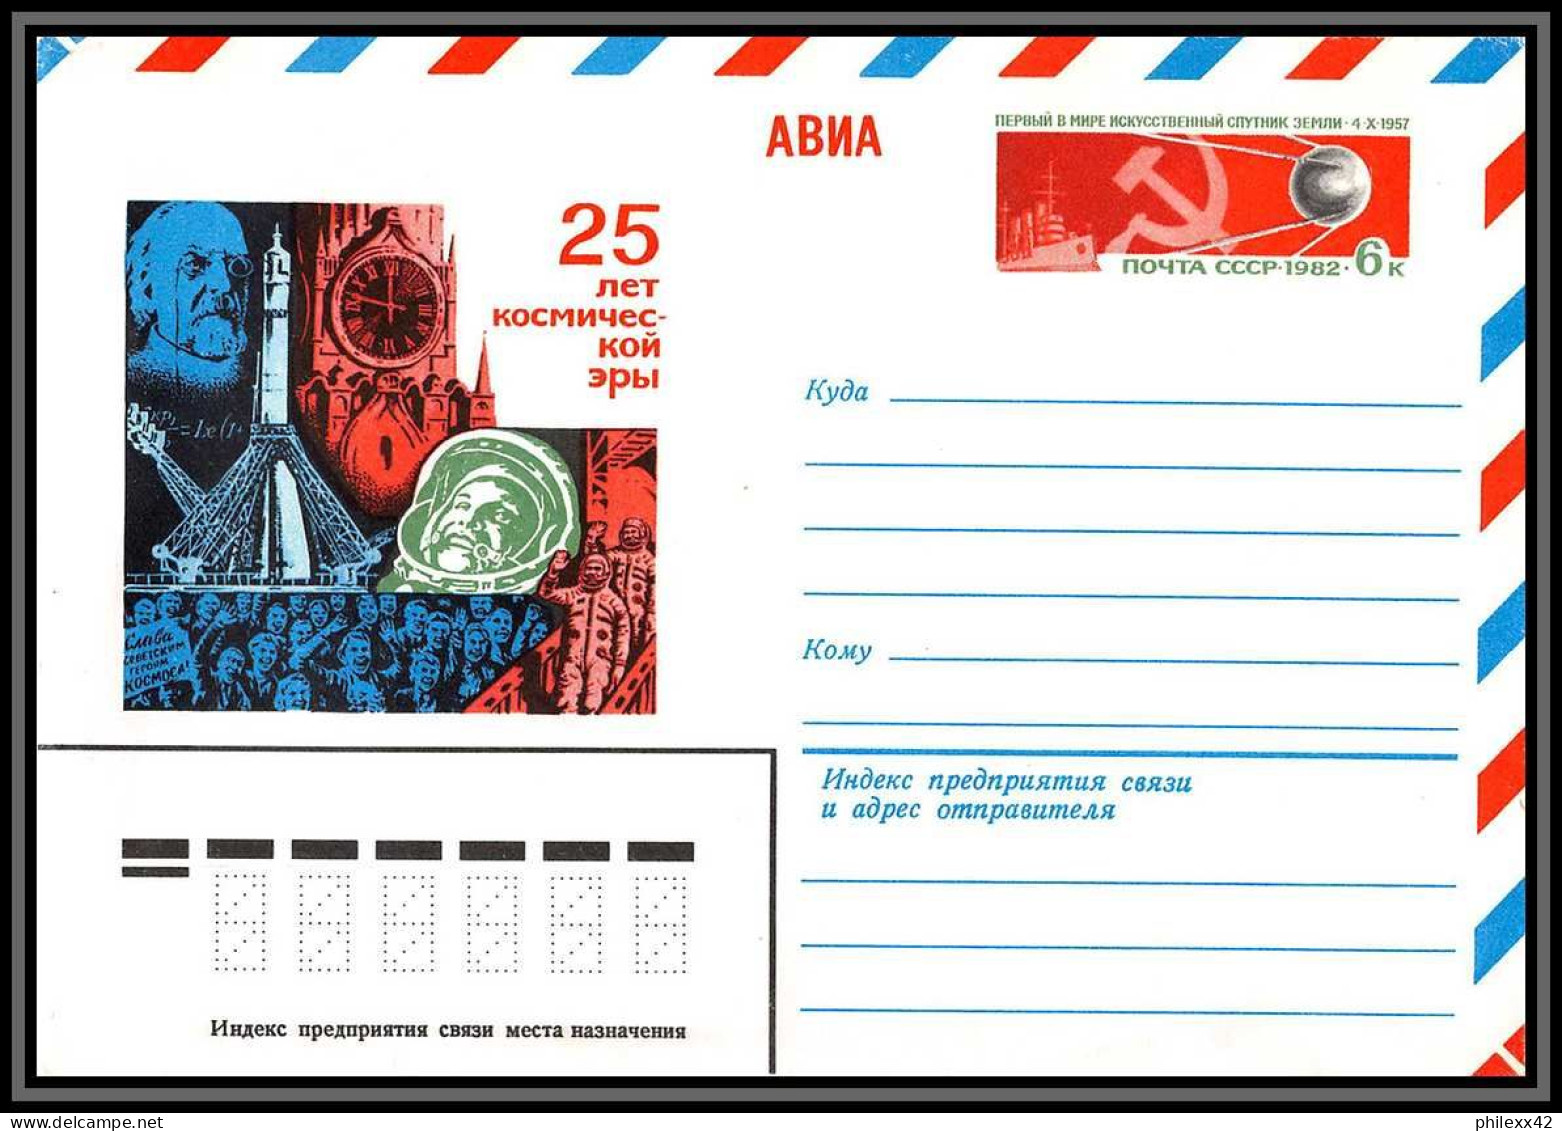 3694 Espace (space) Lot De 2 Entier Postal Stationery Russie (Russia Urss USSR) 17/09/1982 Tsiolkovski - Russia & USSR